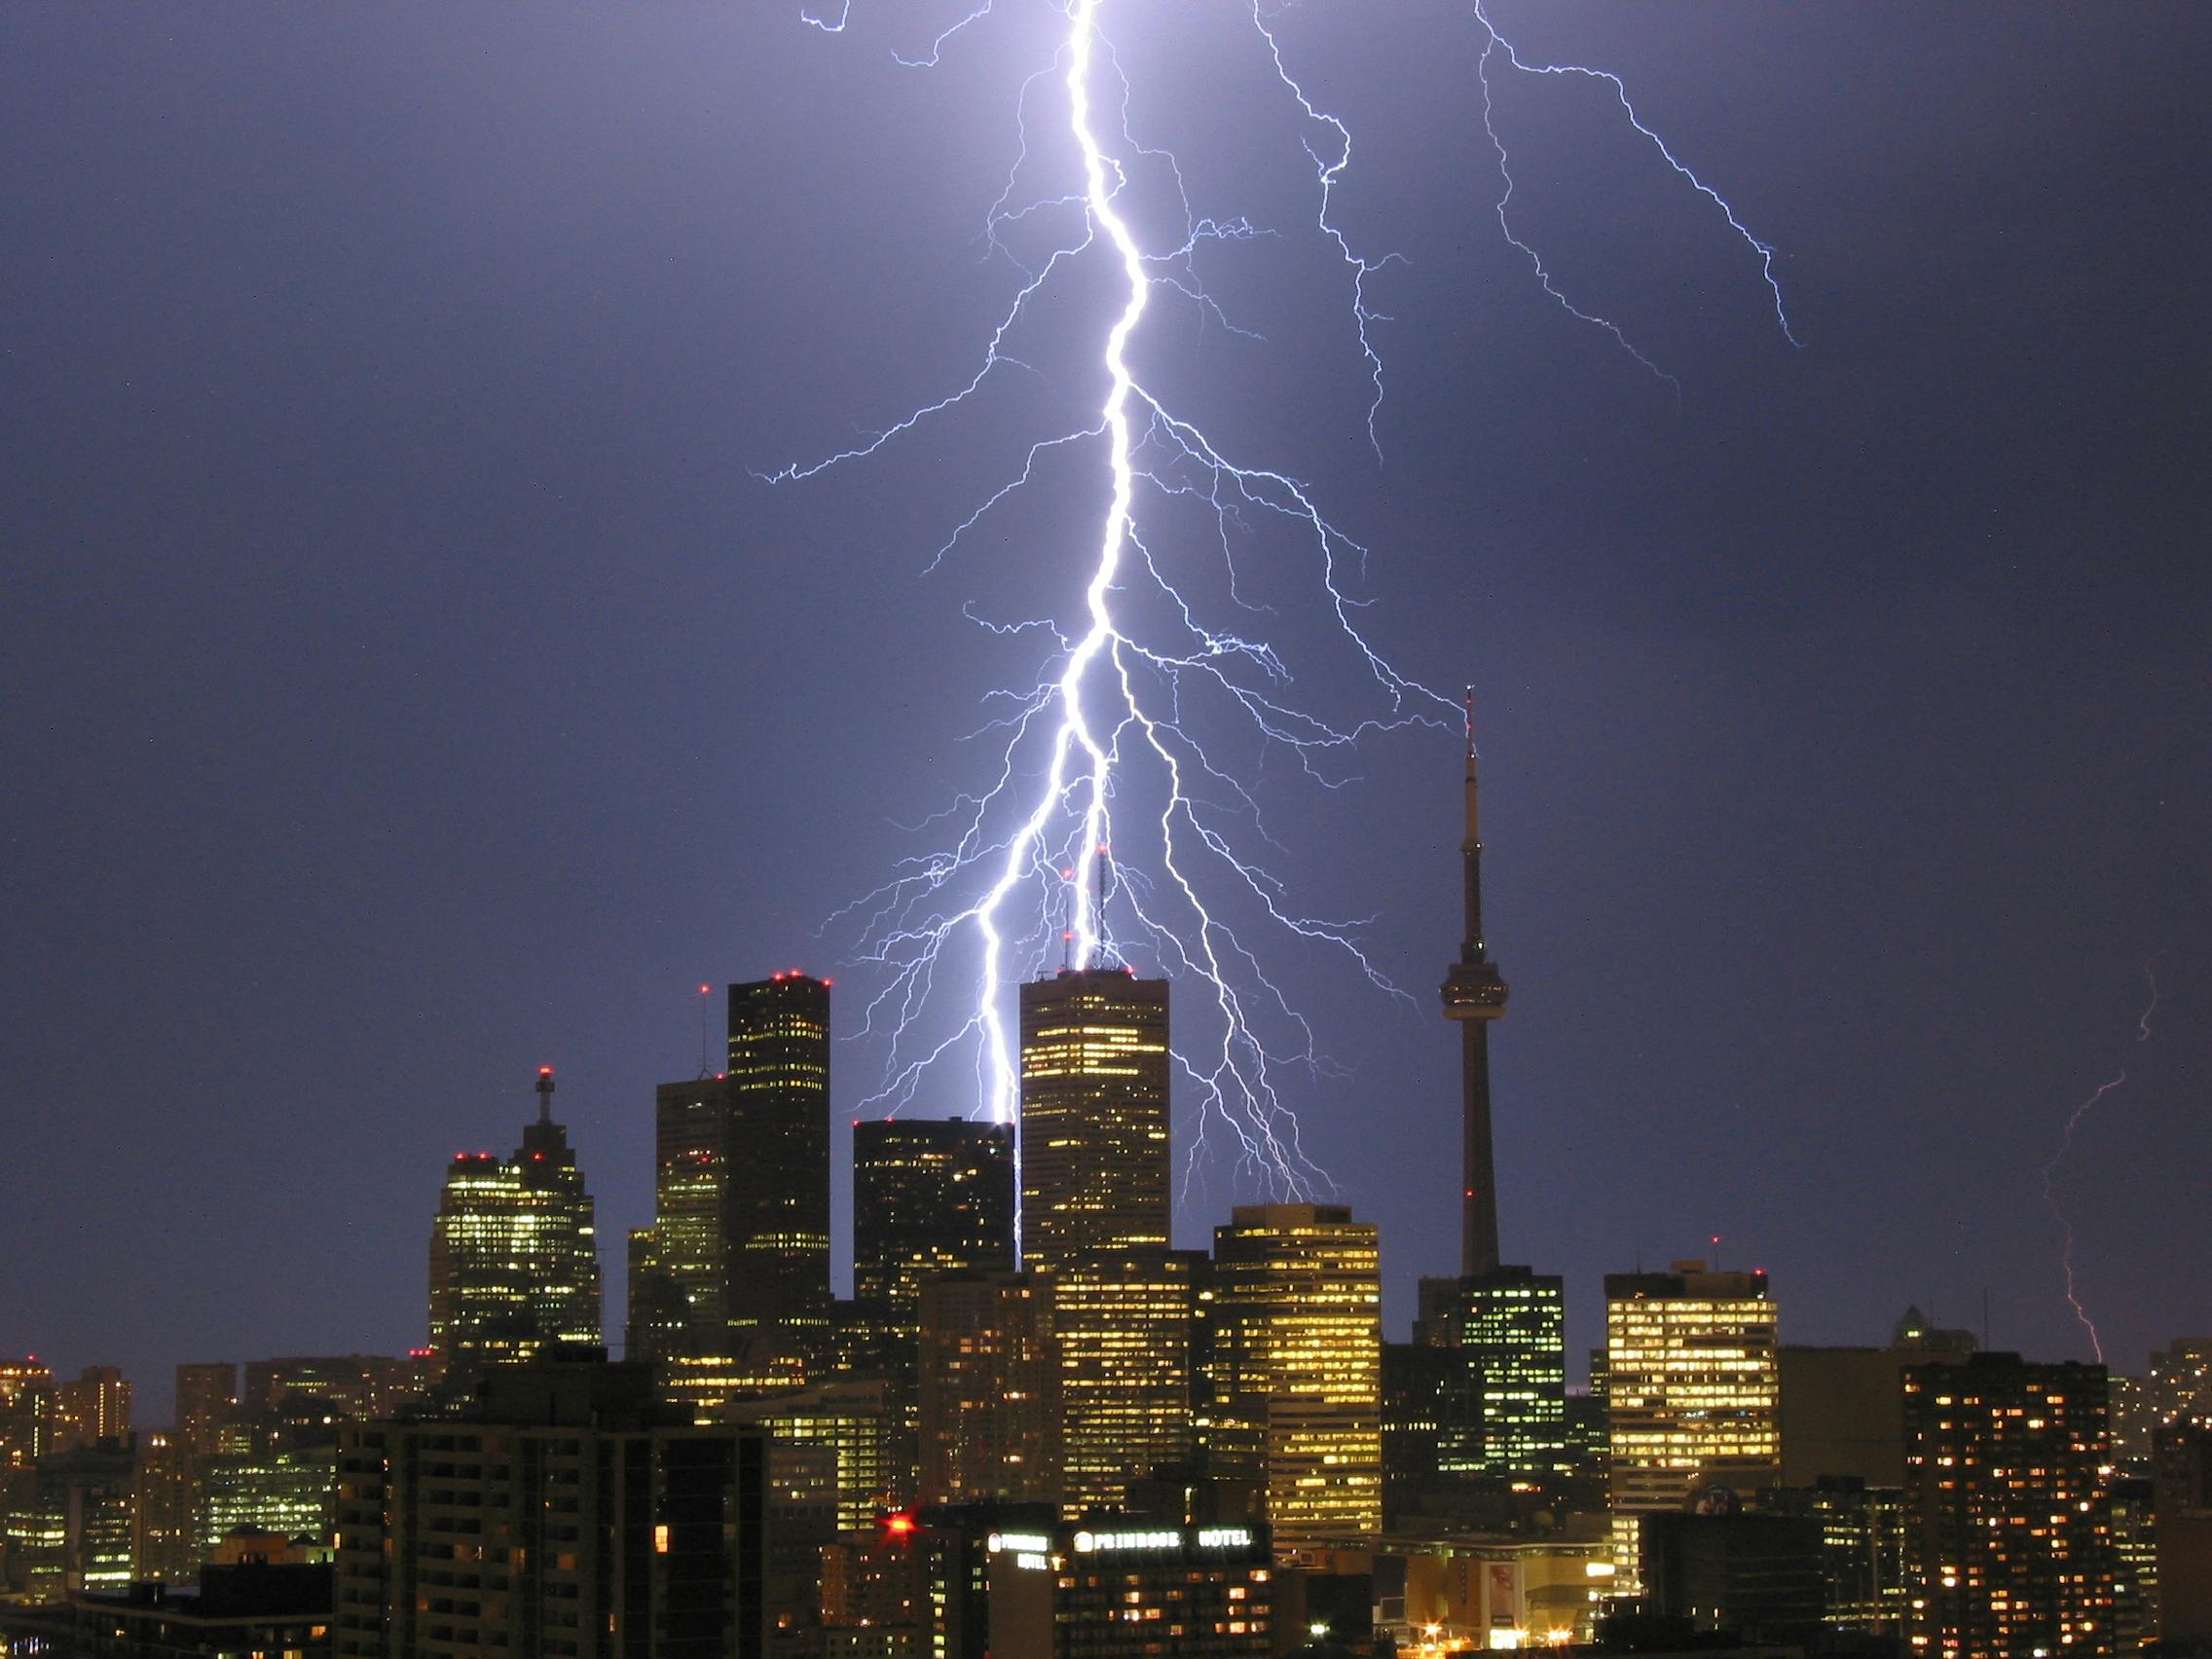 lightning during thunderstorm over city